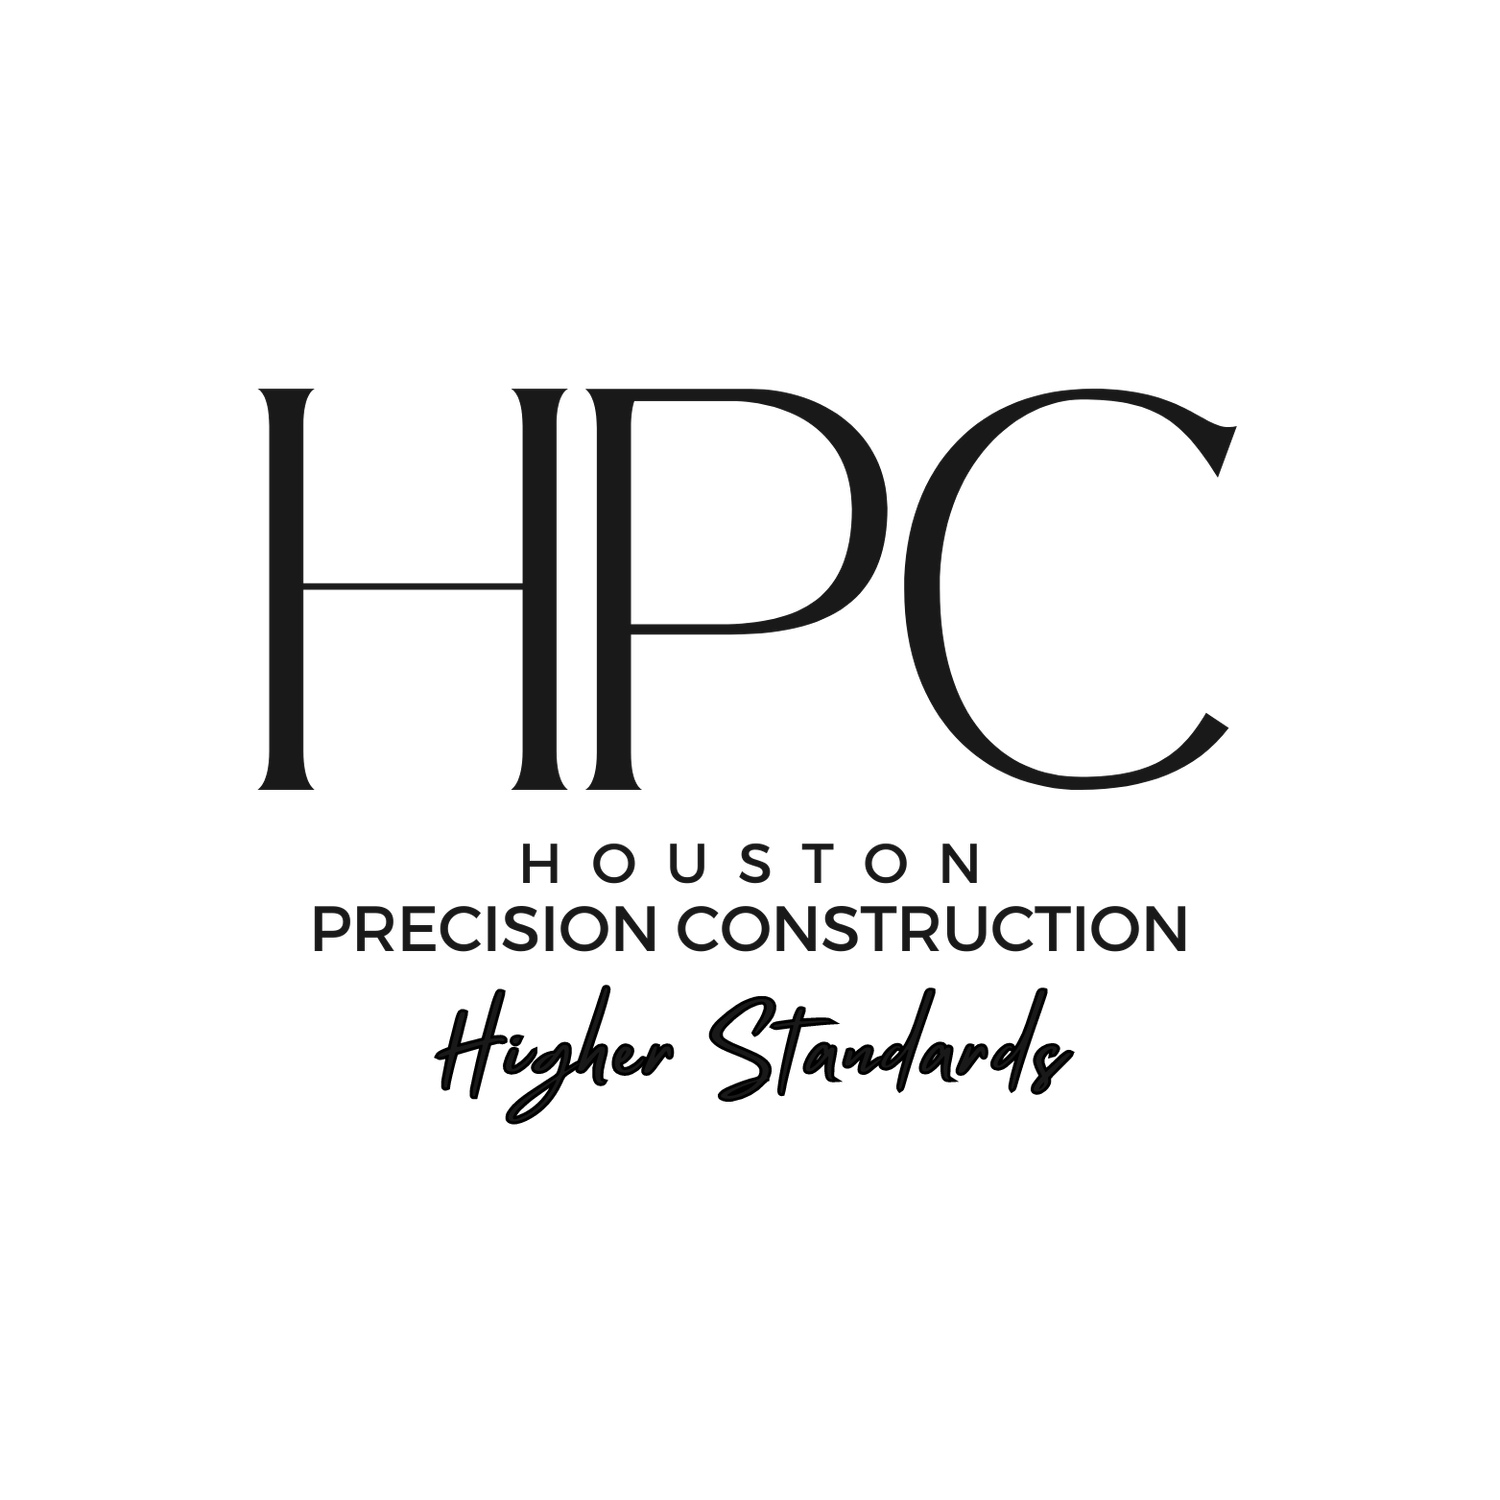 Houston precision construction